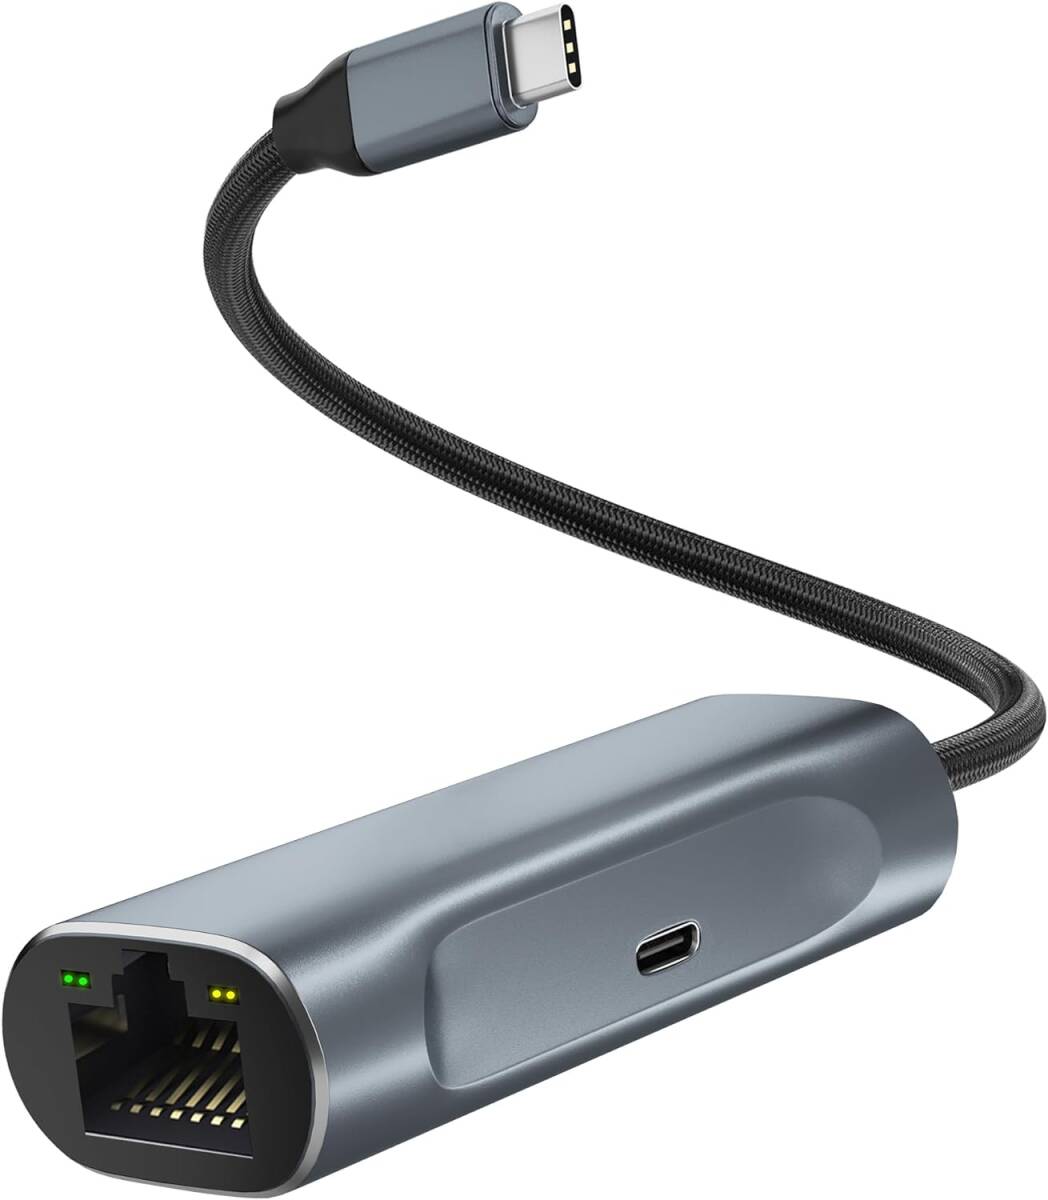 USB C LAN変換アダプター 2-IN-1有線LANアダプター